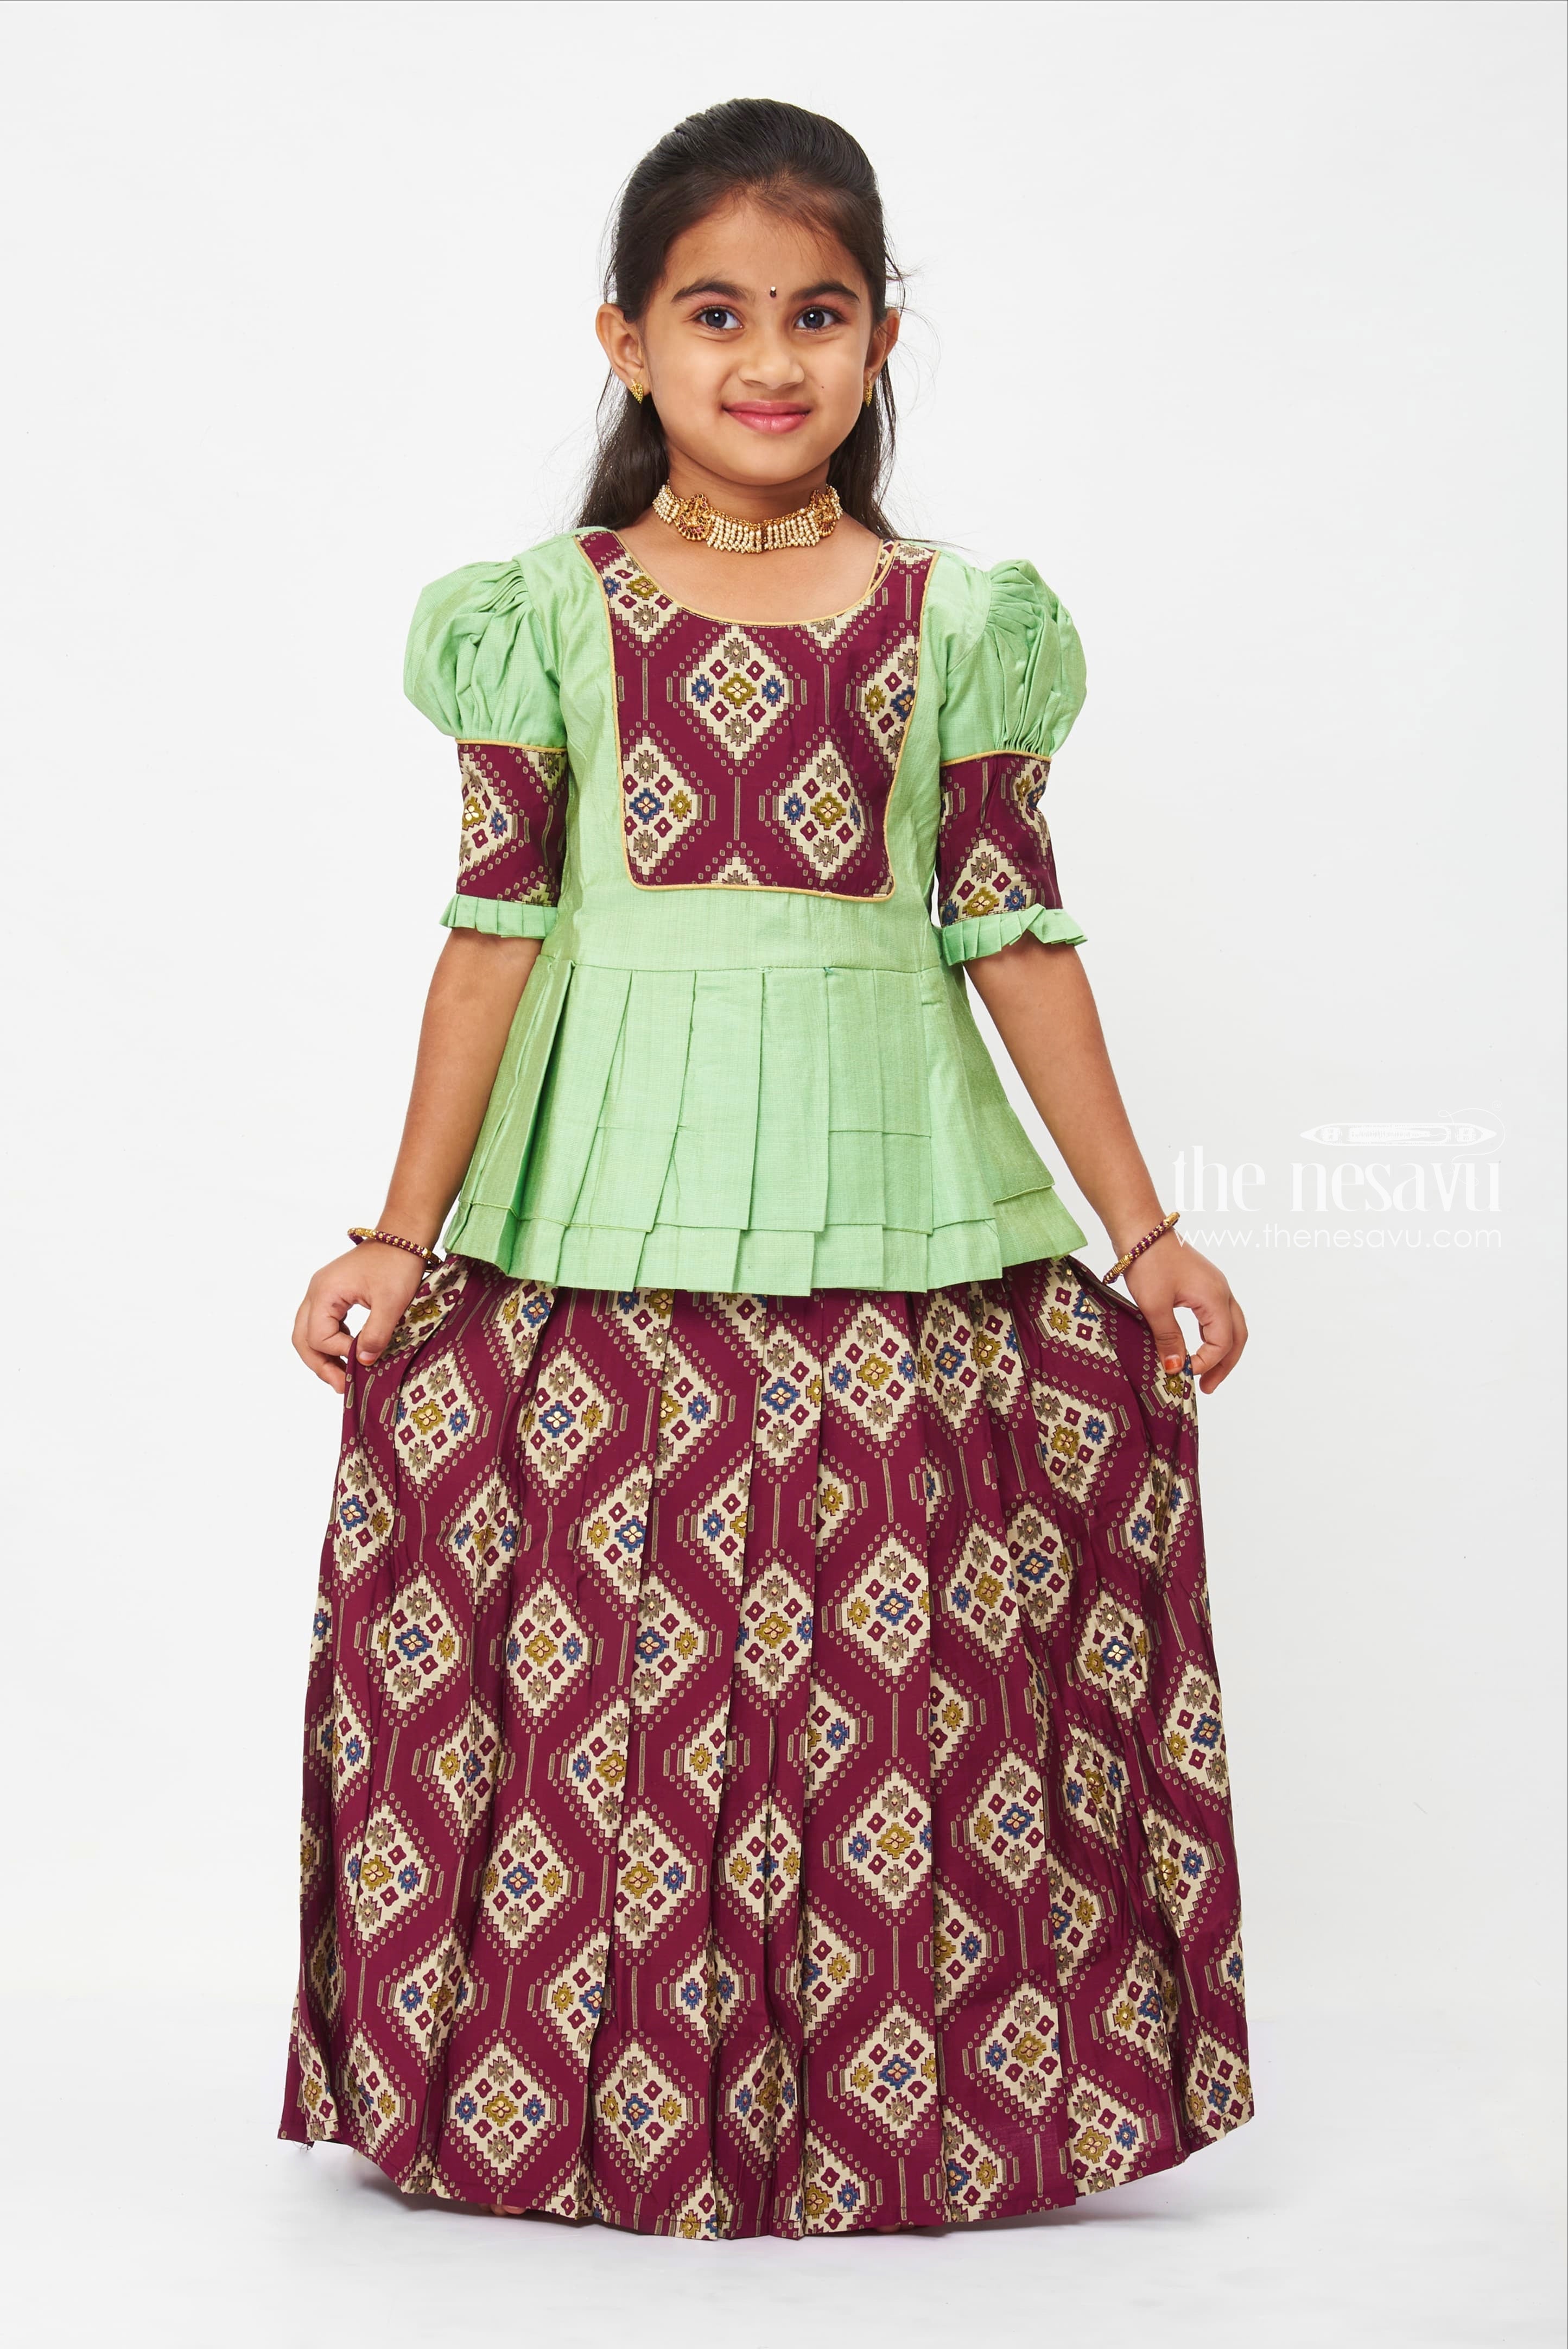 Amazon.com: Ashwini Girl's Maroon Pattu Pavadai | Indian Ethnic Kids Wear  (1.5 Years, Burgundy): Clothing, Shoes & Jewelry